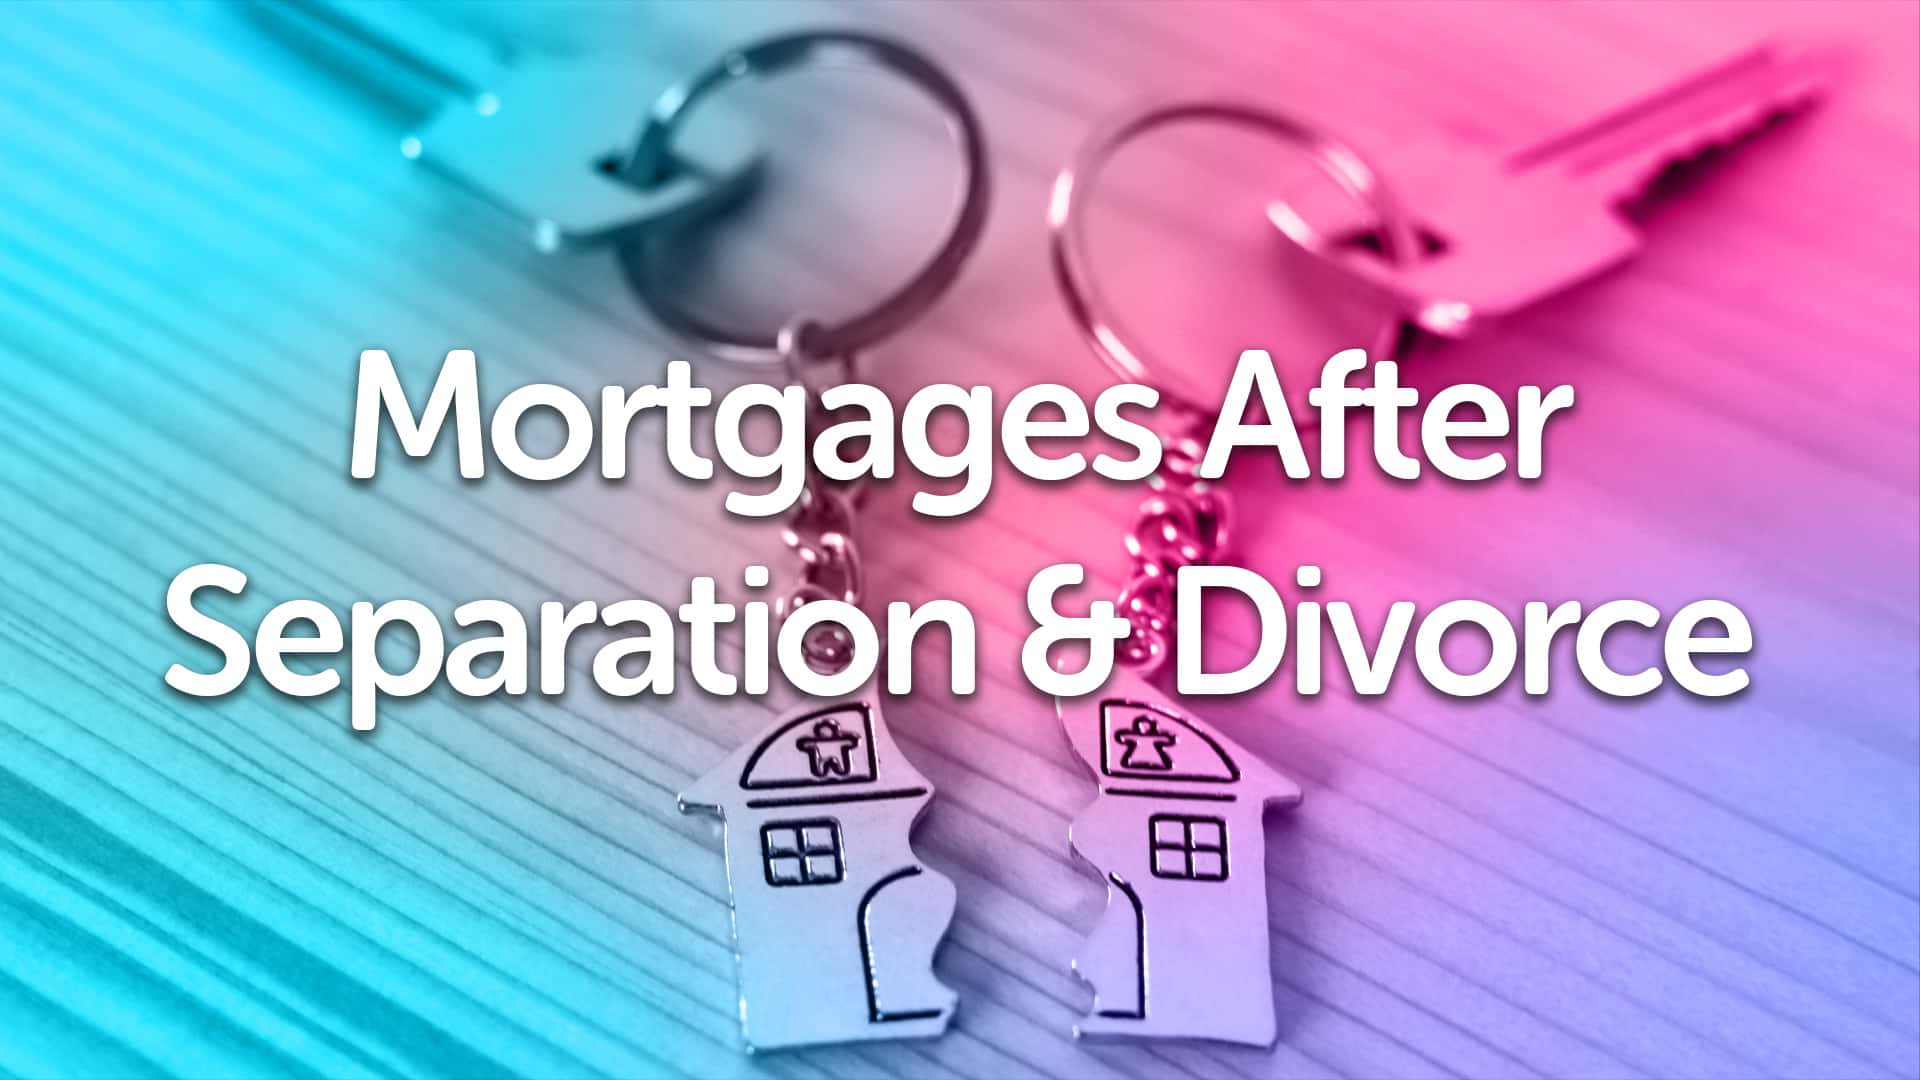 Divorce & Separation Mortgage Advice in Doncaster